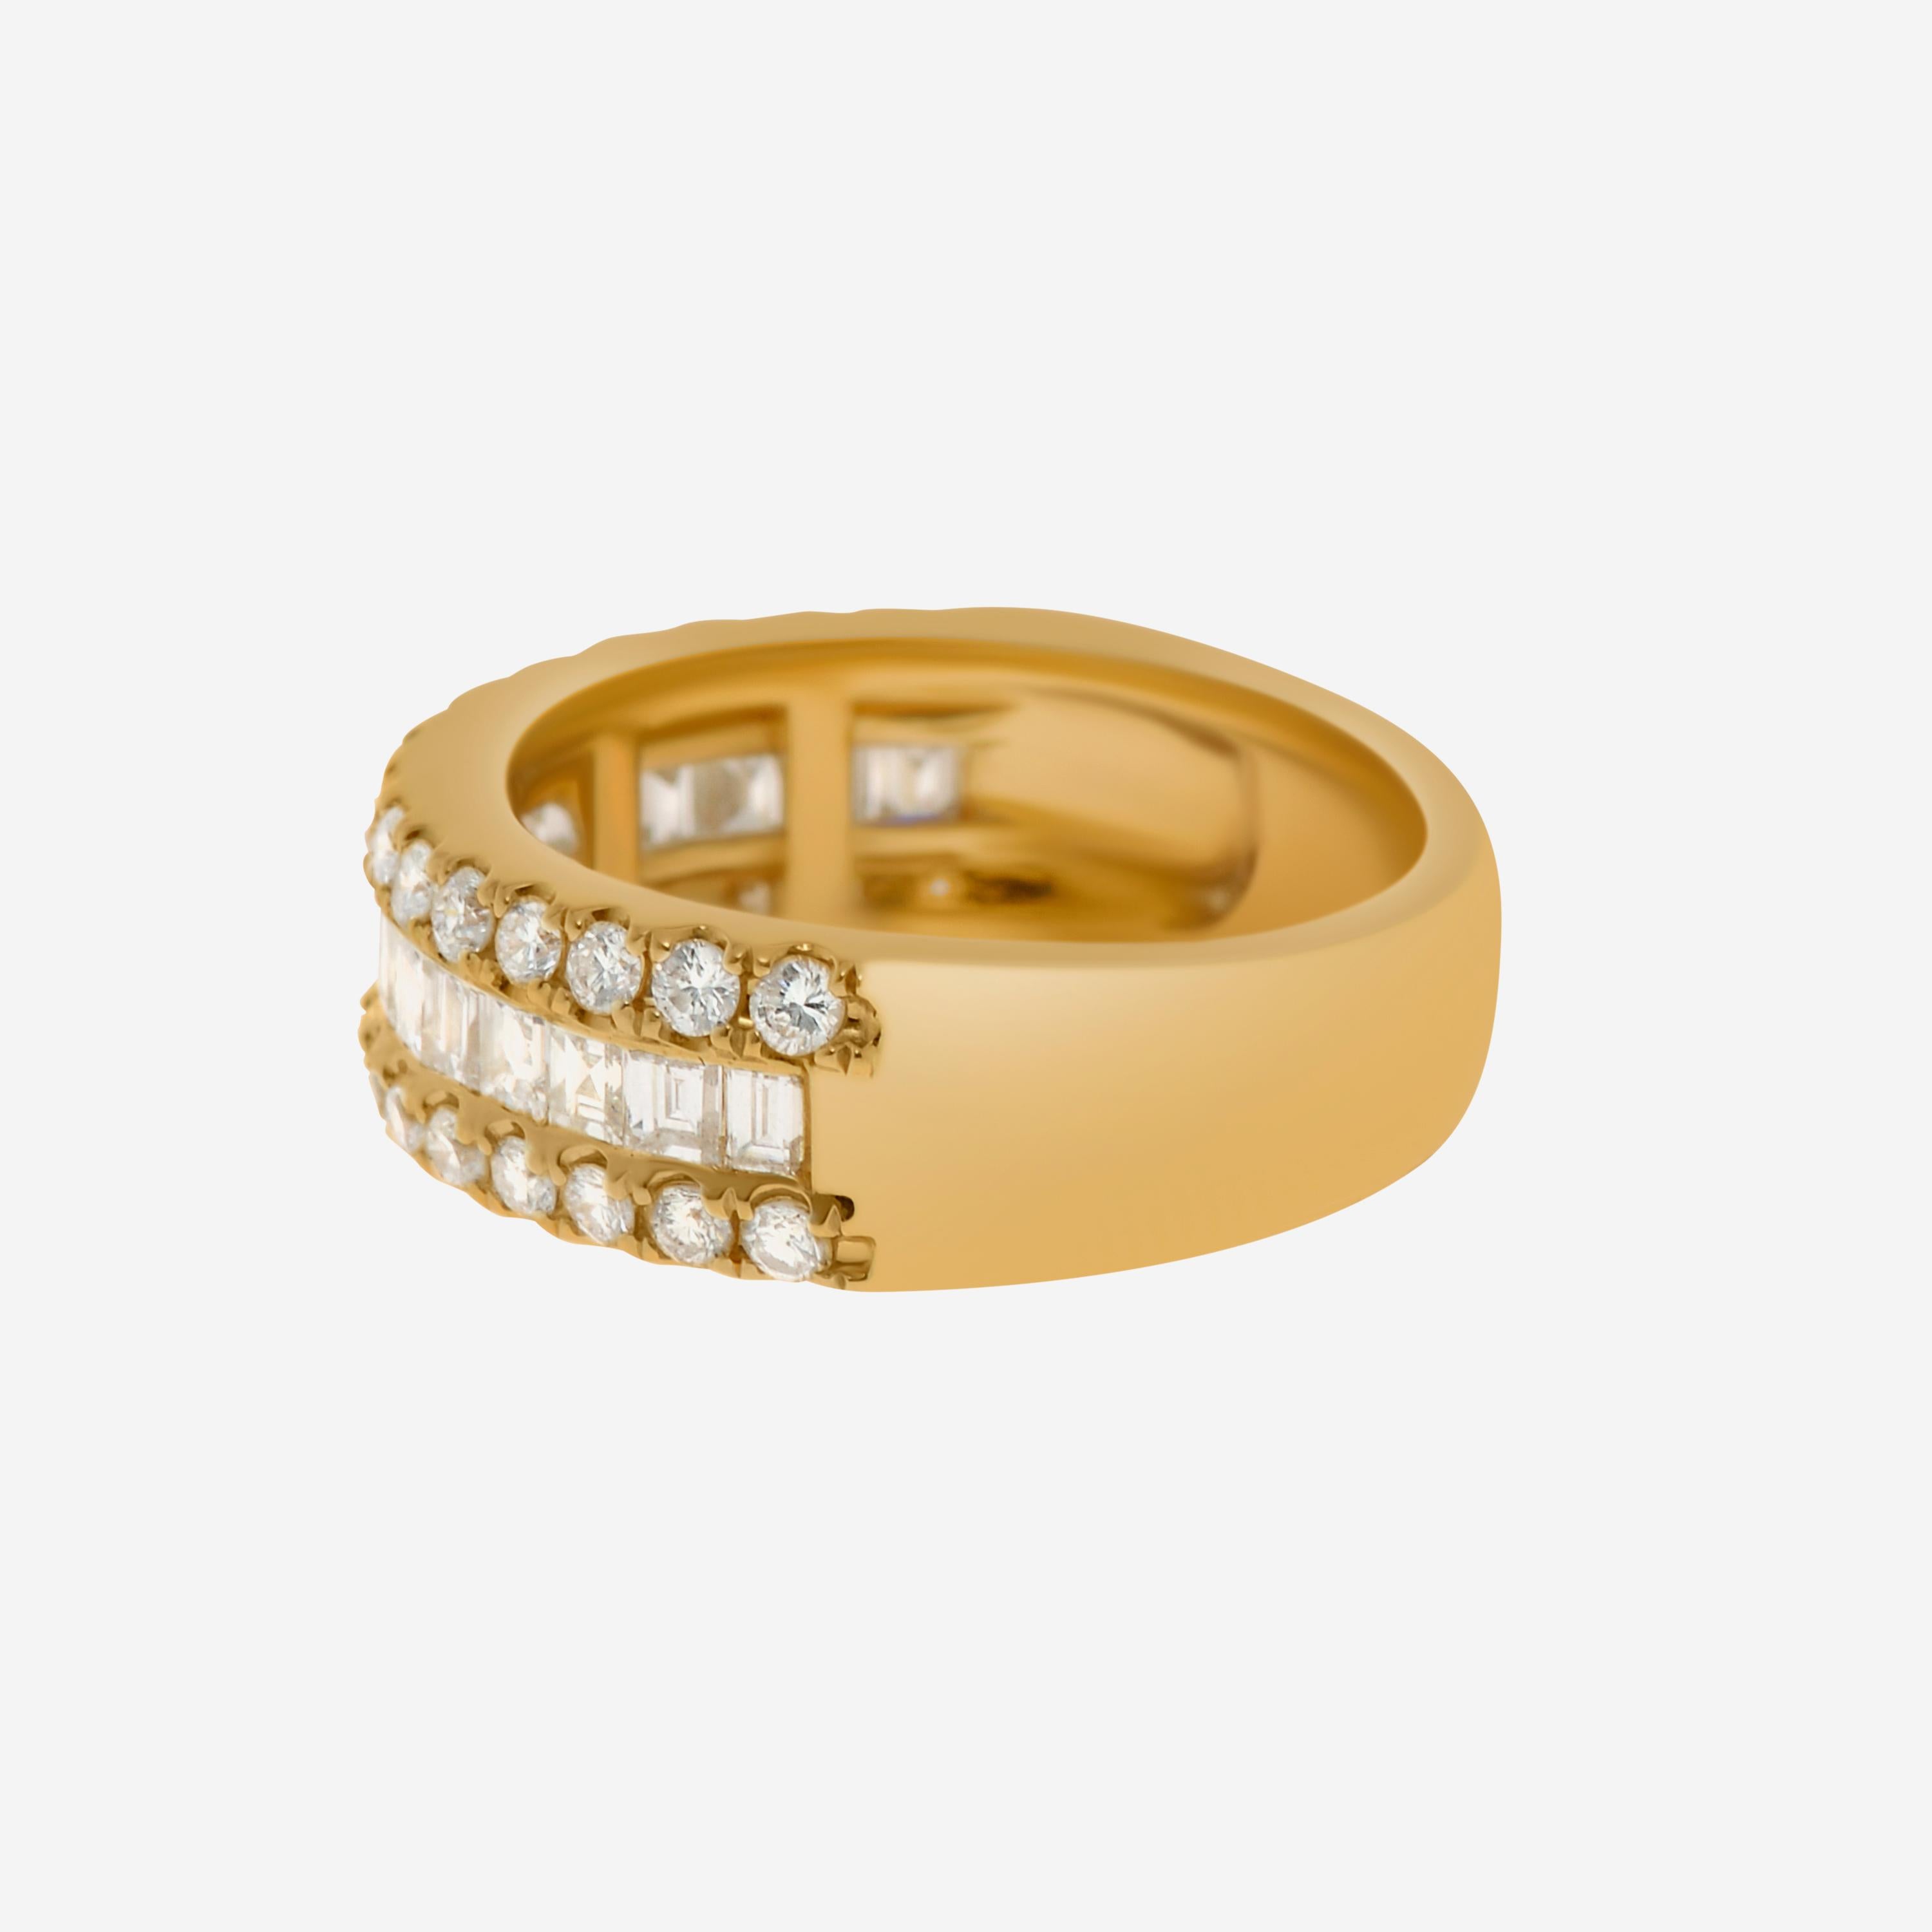 Contemporary Tresorra 18K Yellow Gold, Diamond Band Ring Sz. 6.25 For Sale